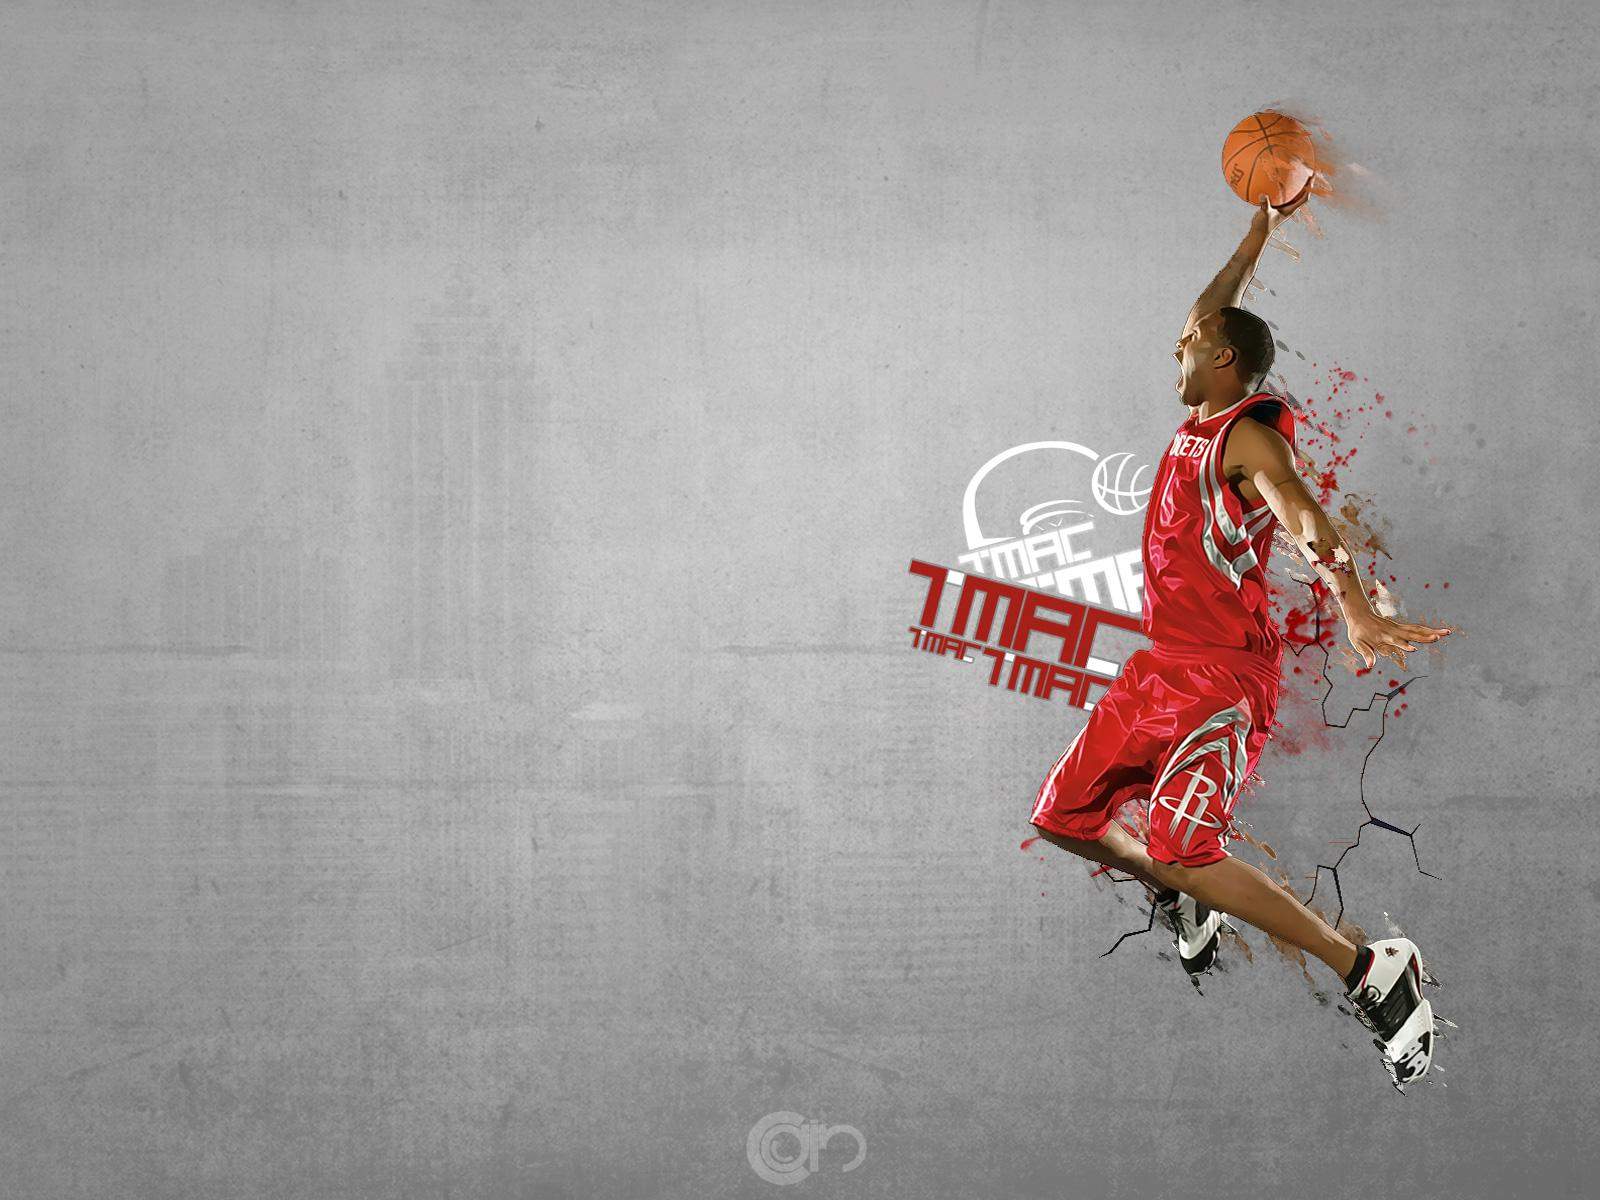 http://3.bp.blogspot.com/-_JU5PeNcAp0/T9GytgUYIMI/AAAAAAAAEq4/pVnJRNvNiJw/s1600/t-mac-slam-dunk-basketball-sport-wallpapers.jpg